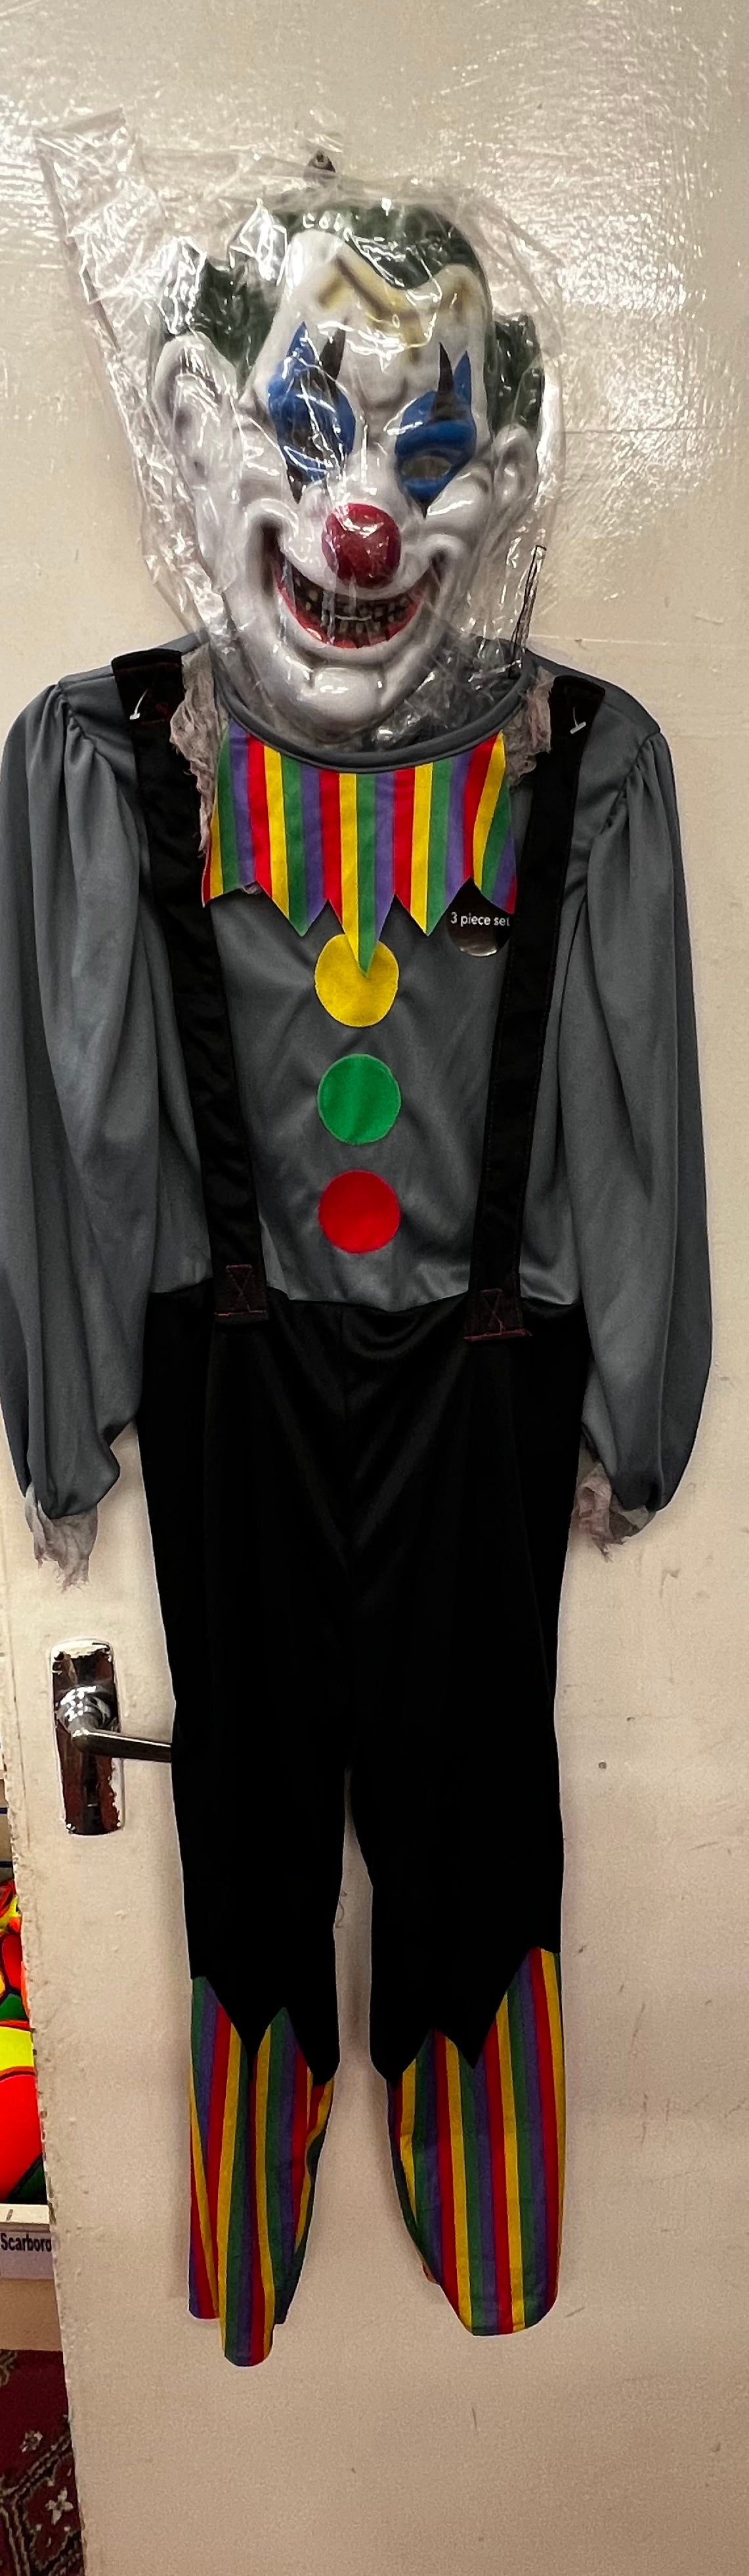 Joker clown costume